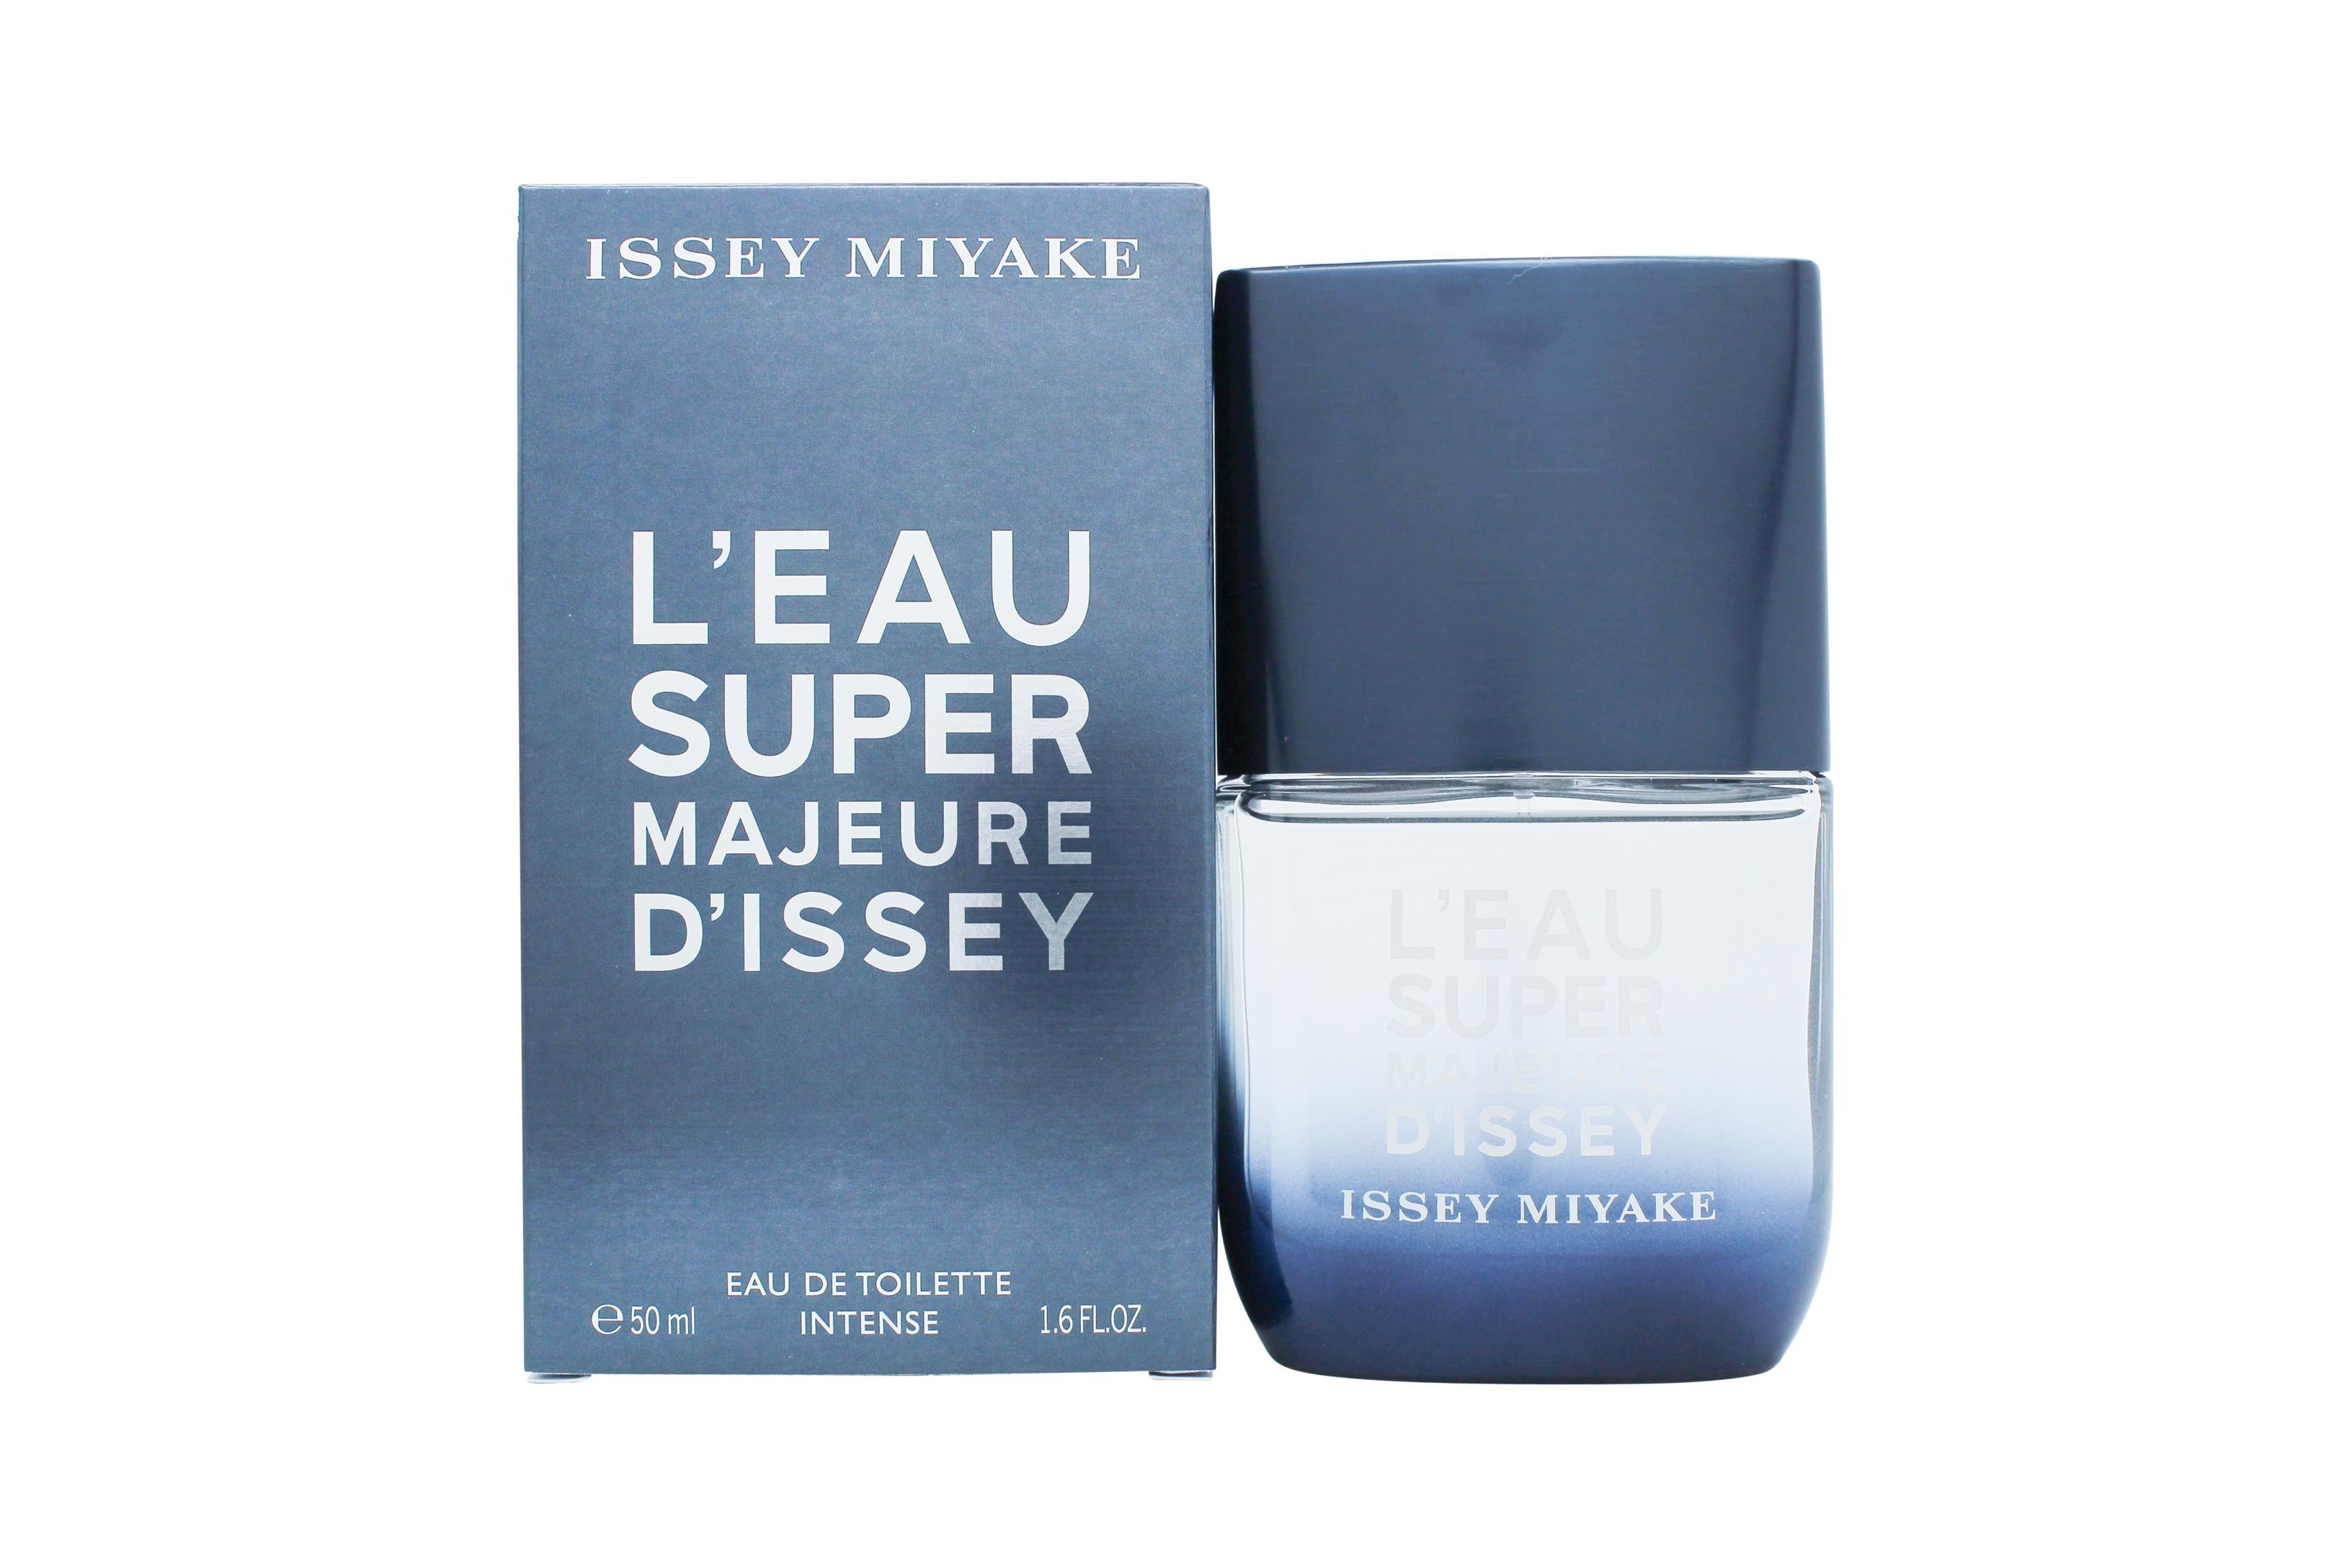 View Issey Miyake LEau Super Majeure dIssey Eau de Toilette 50ml Spray information